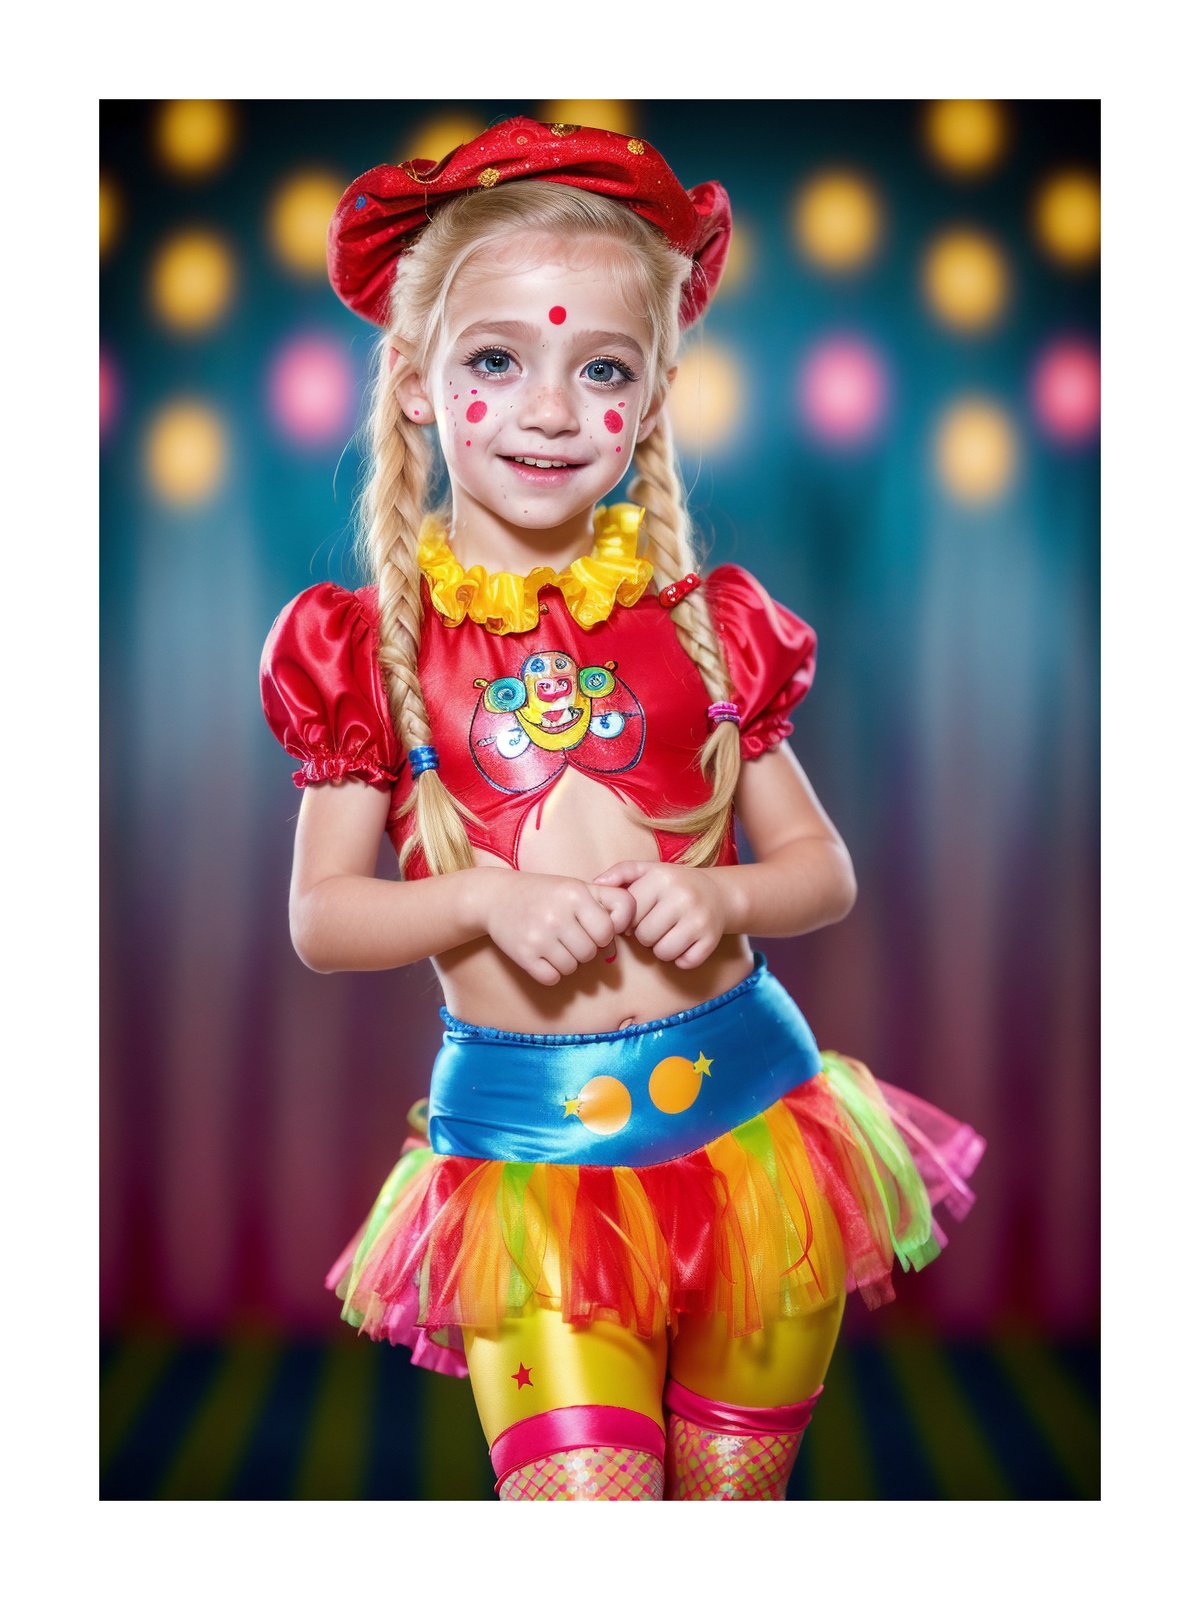 02. Cute Clown by L. Holmqvist.jpg